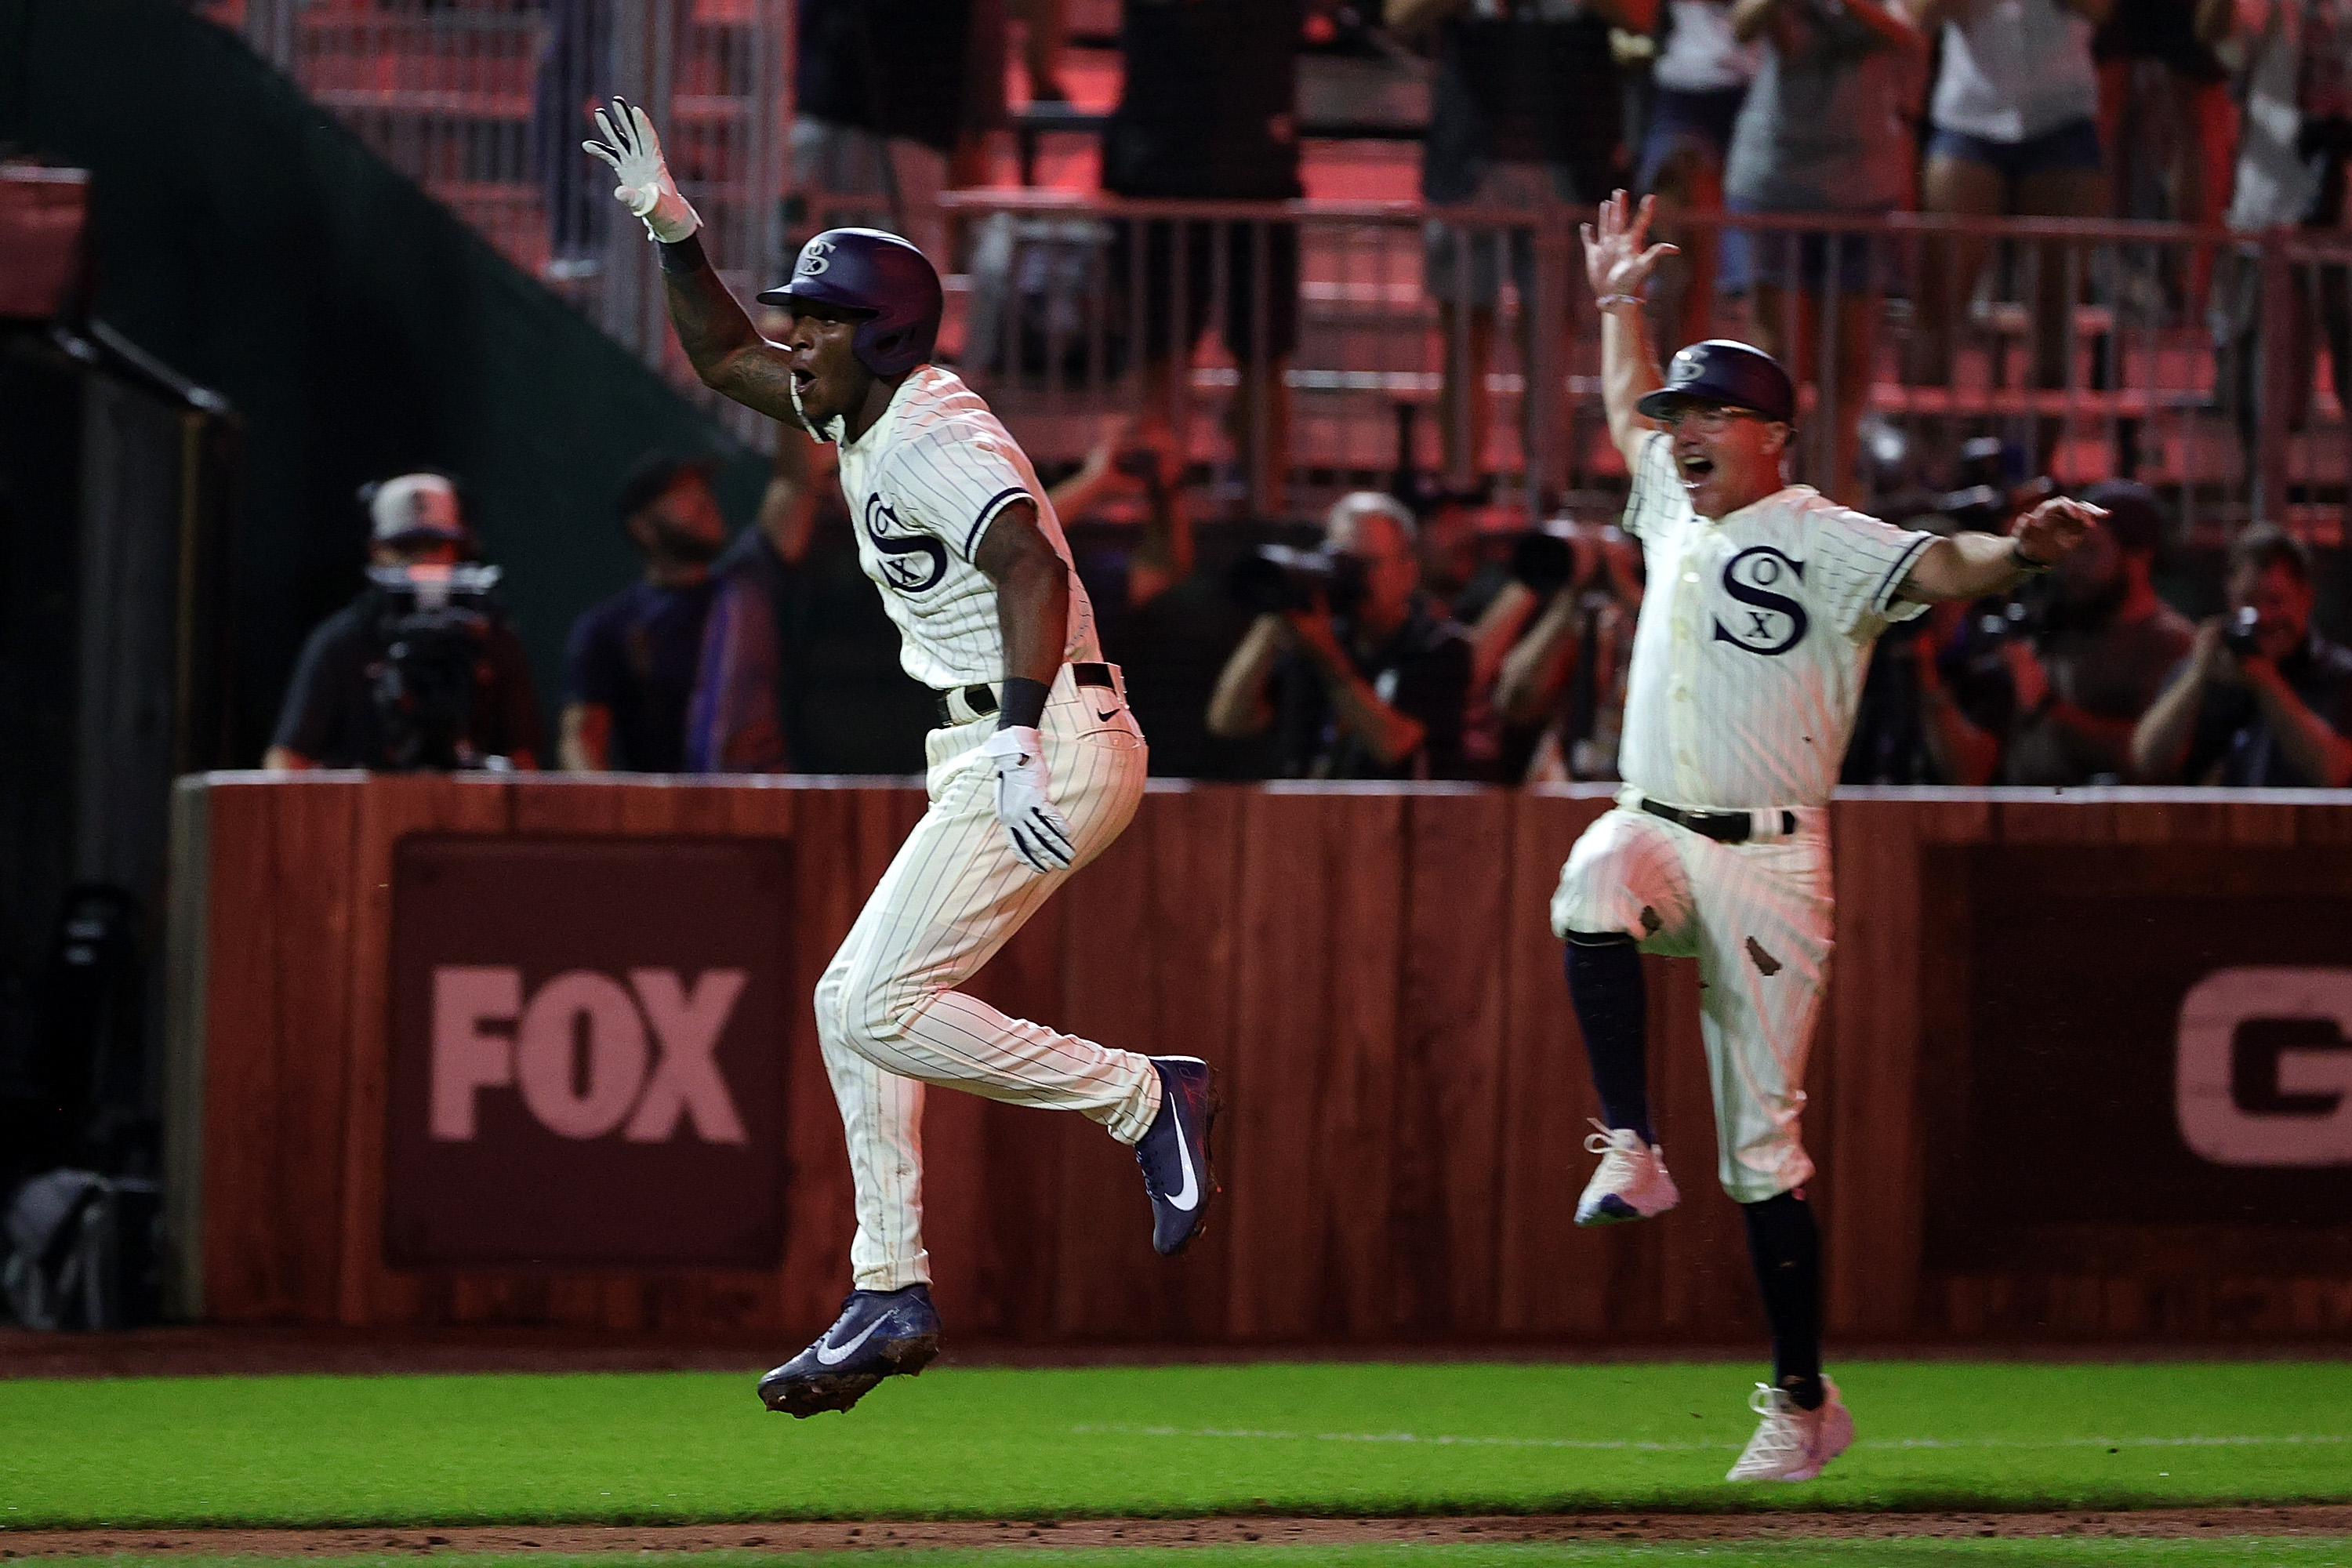 Dream ending in Iowa: White Sox's Anderson hits walk-off home run